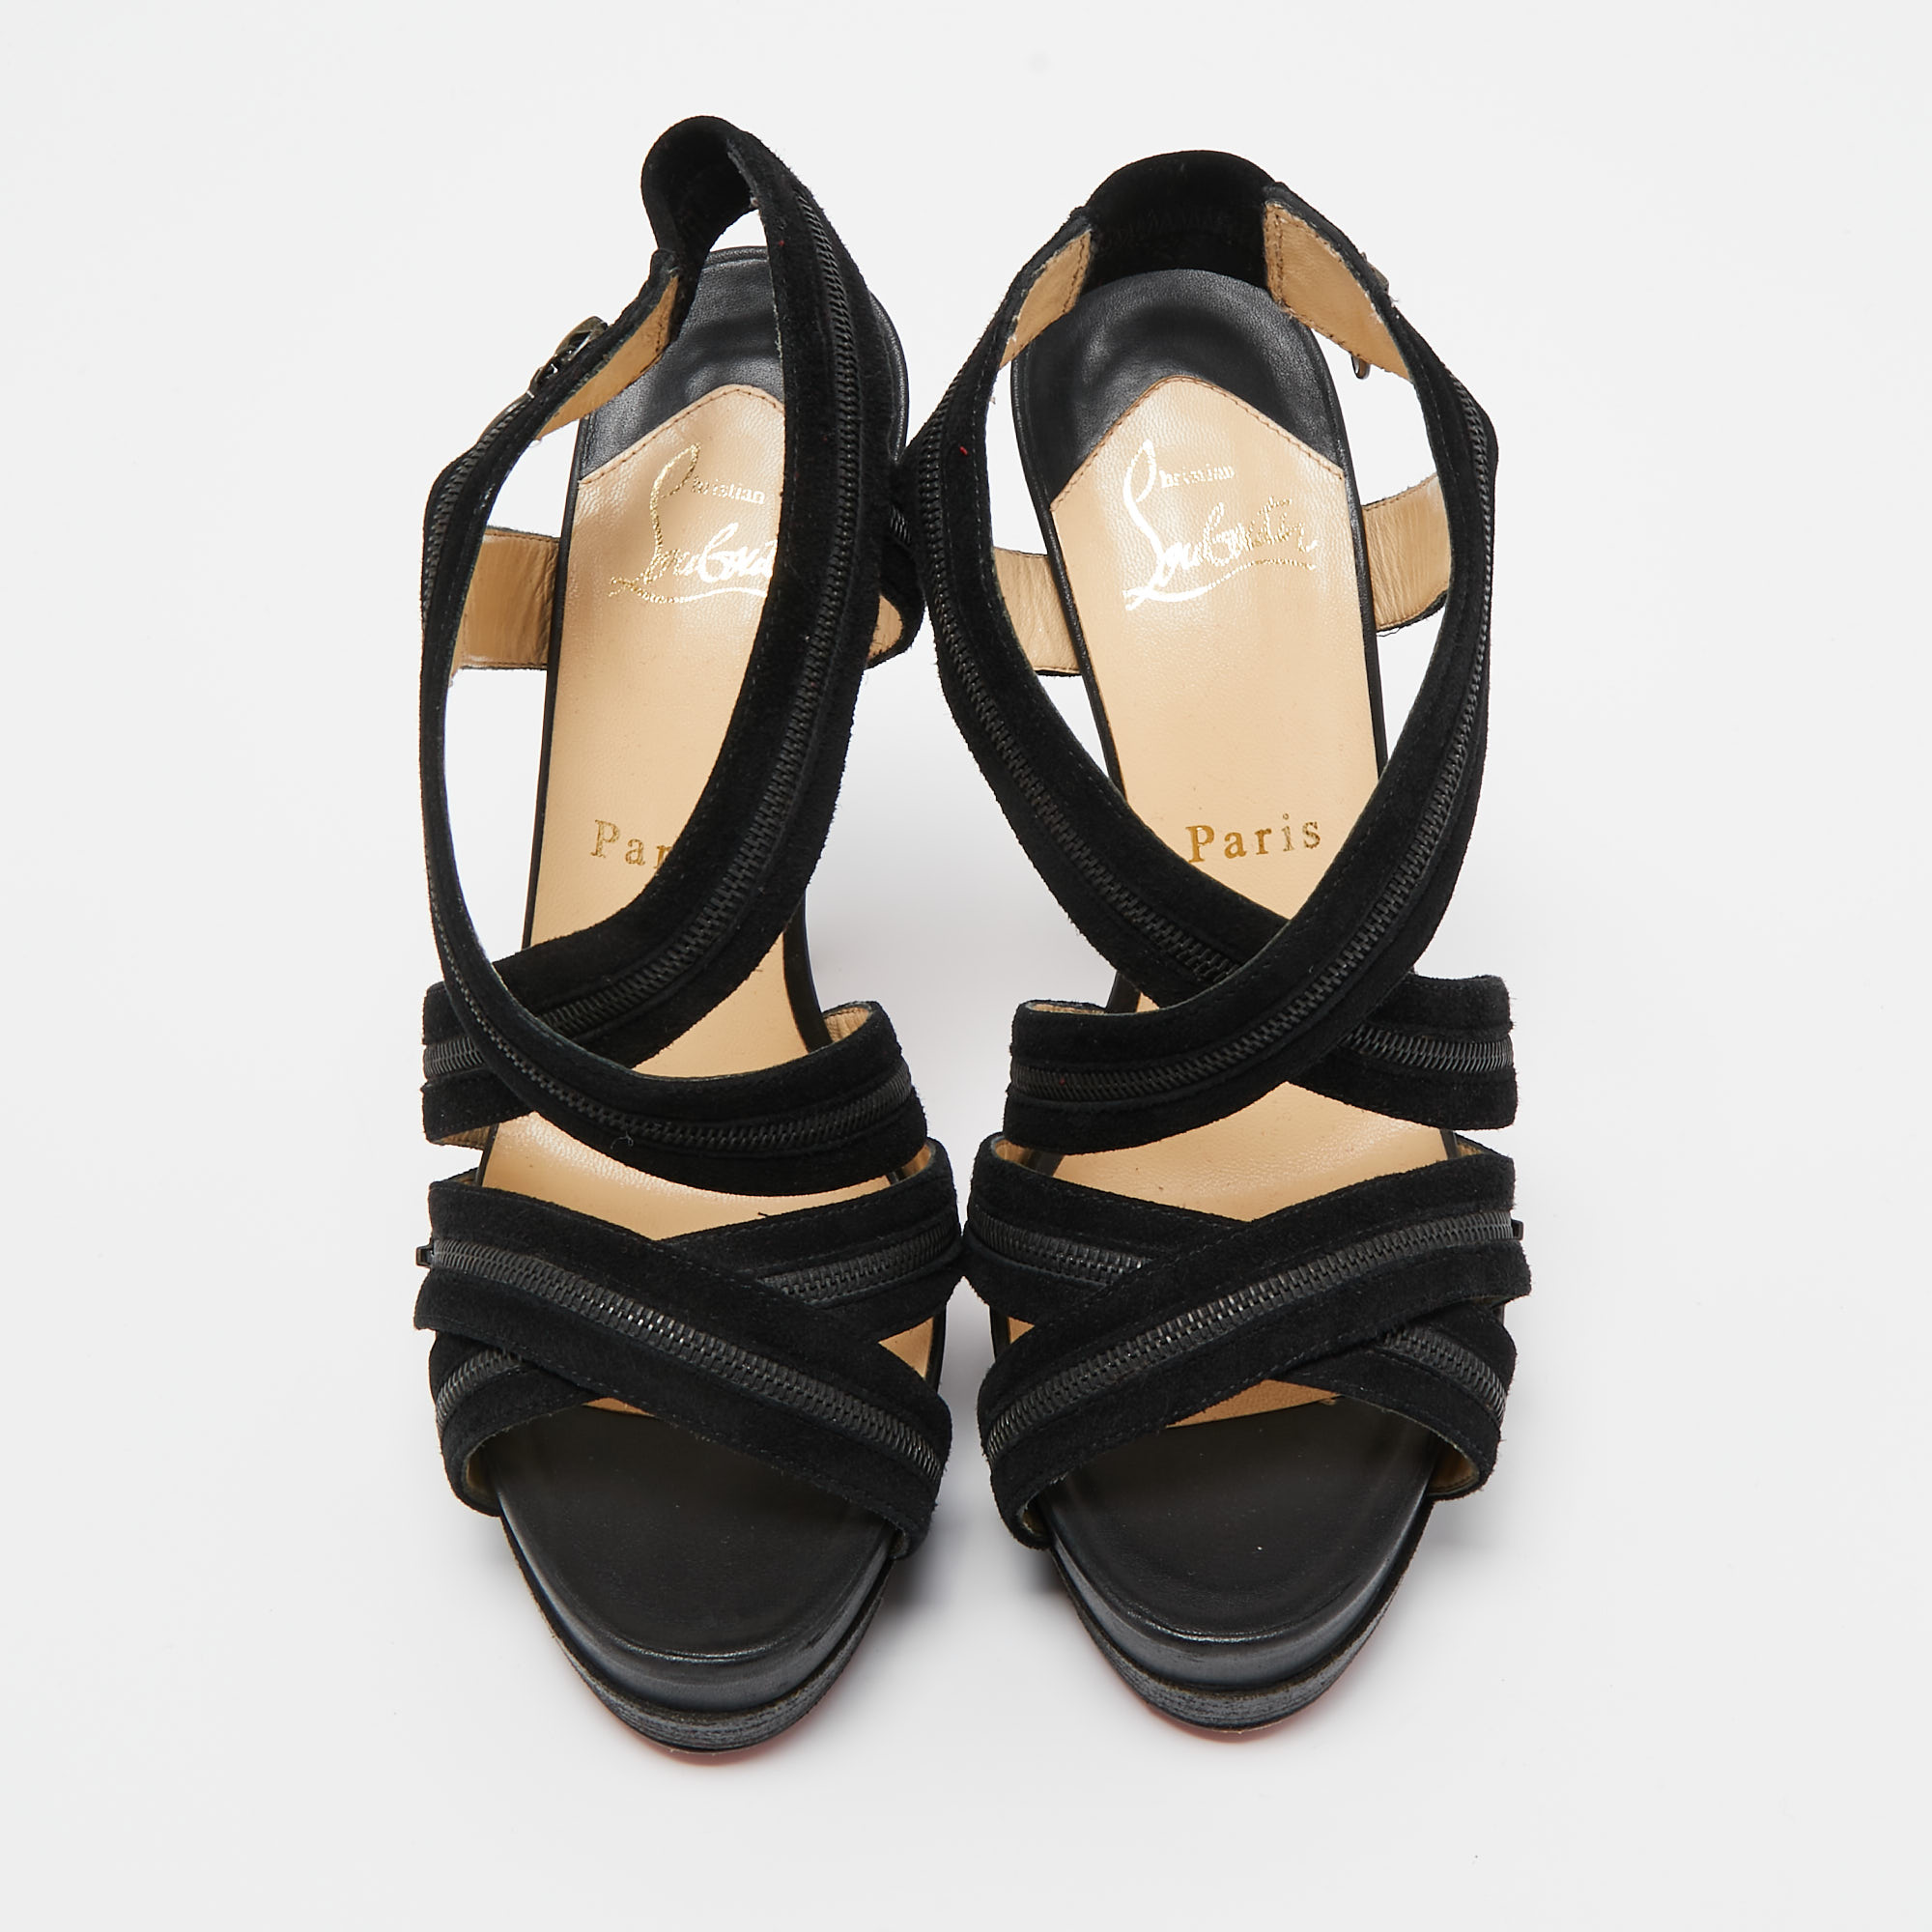 Christian Louboutin Black Suede Rodita Sandals Size 36.5